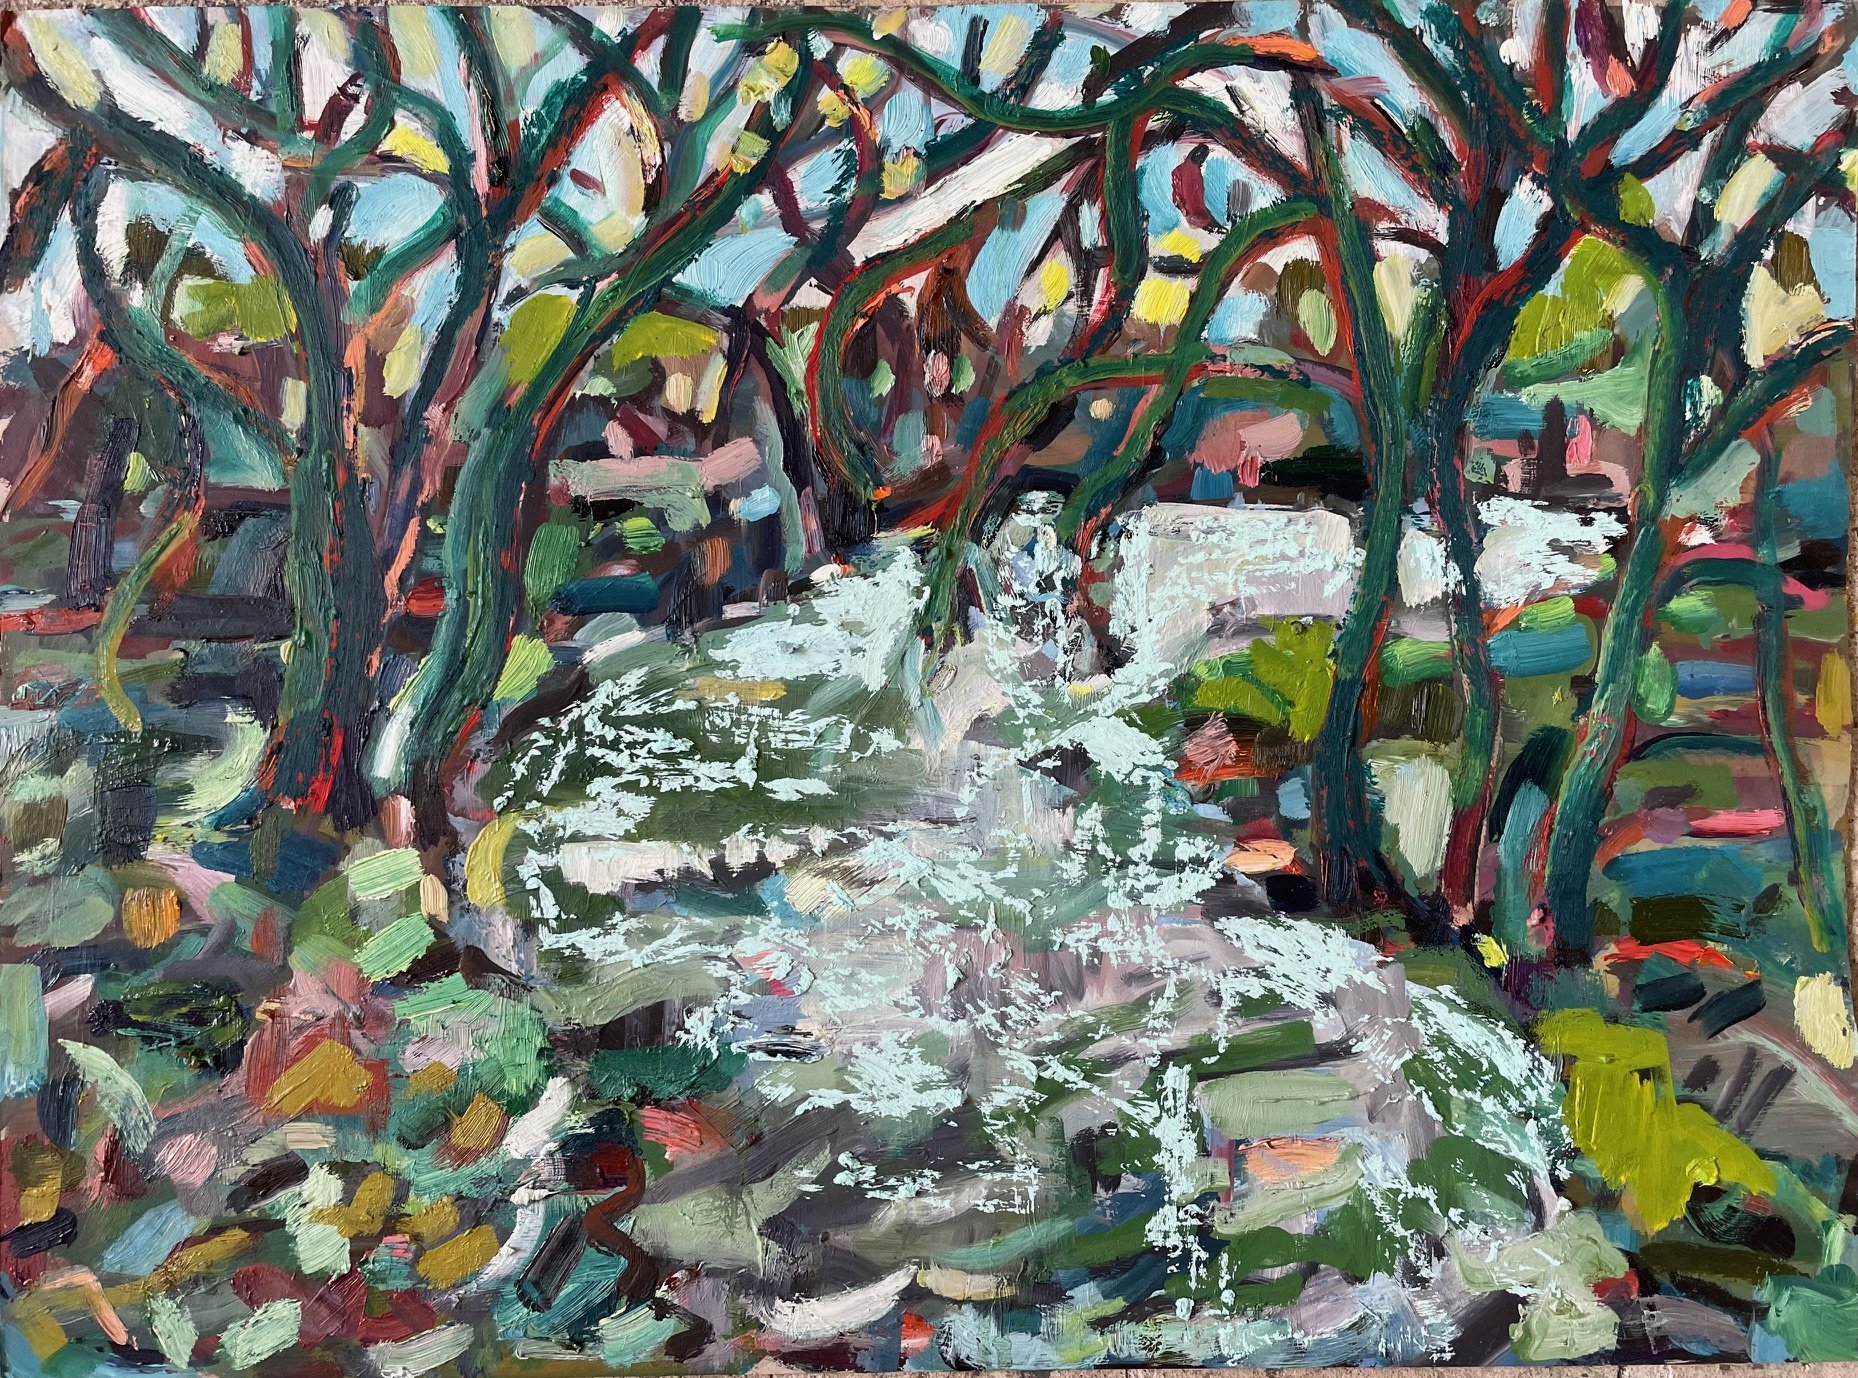 Shiver of stream in winter, oil on canvas, 40x50cm, £725